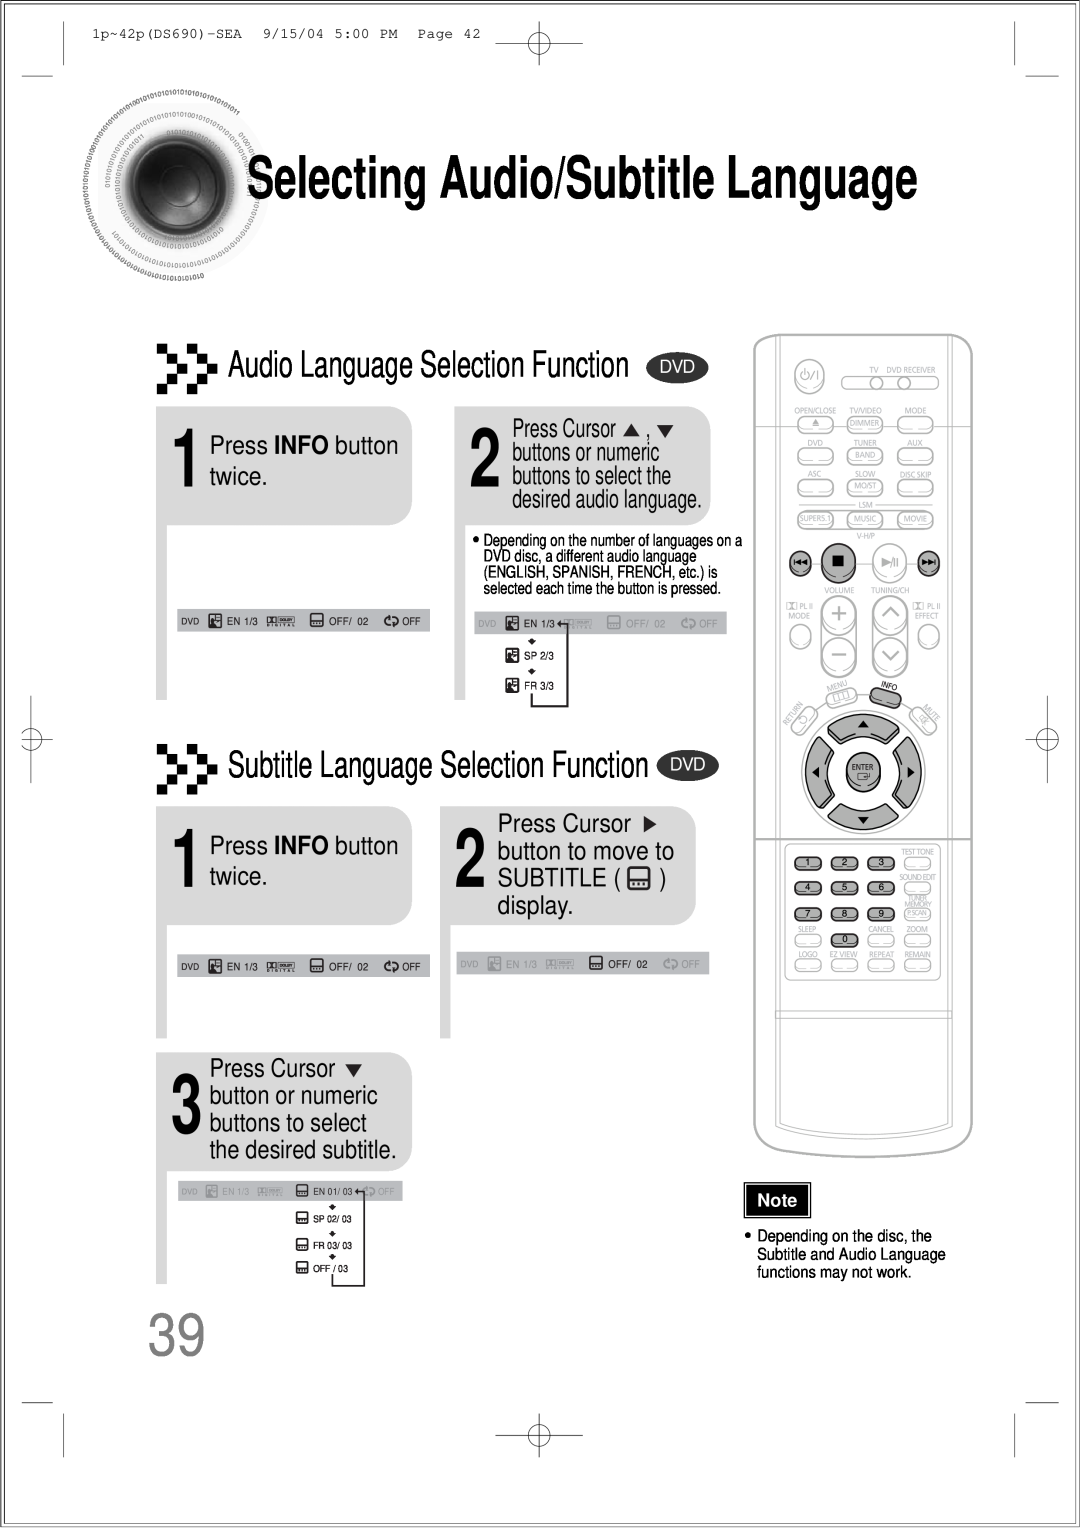 Samsung HT-DS690 Audio Language Selection Function DVD, Subtitle Language Selection Function DVD, 1Press INFO button twice 